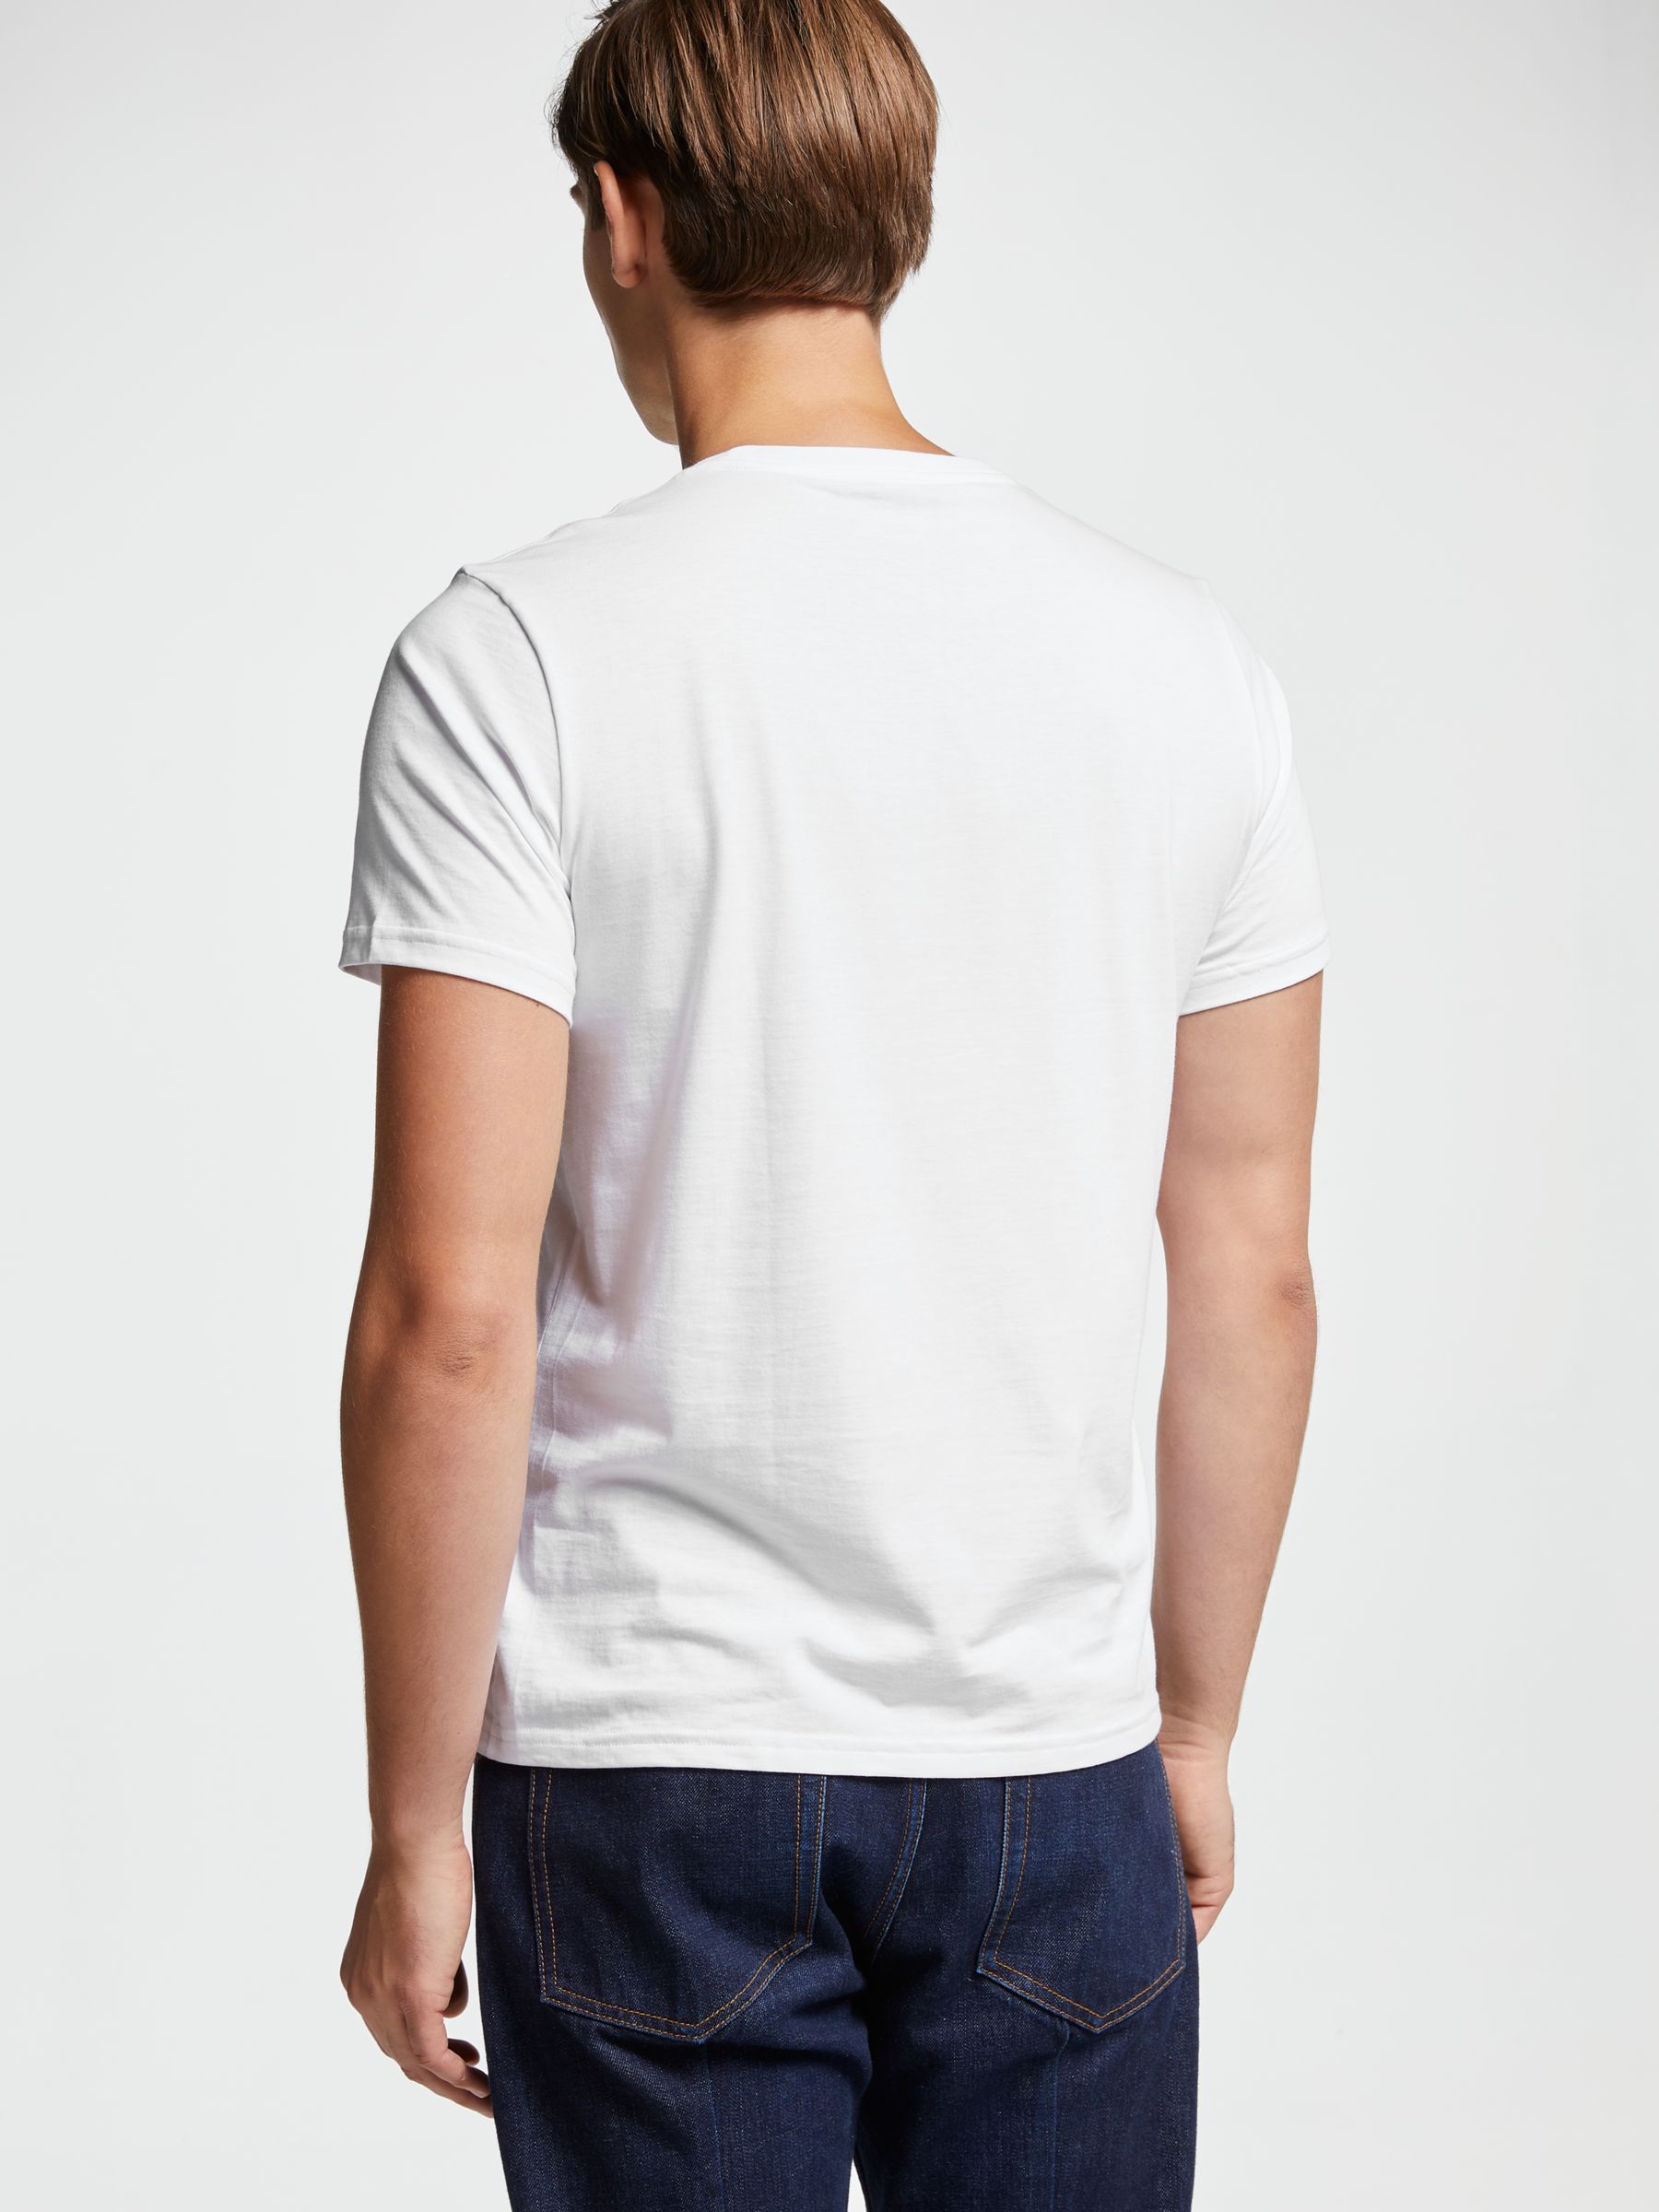 Polo Ralph Lauren Liquid Cotton T-Shirt, White at John Lewis & Partners